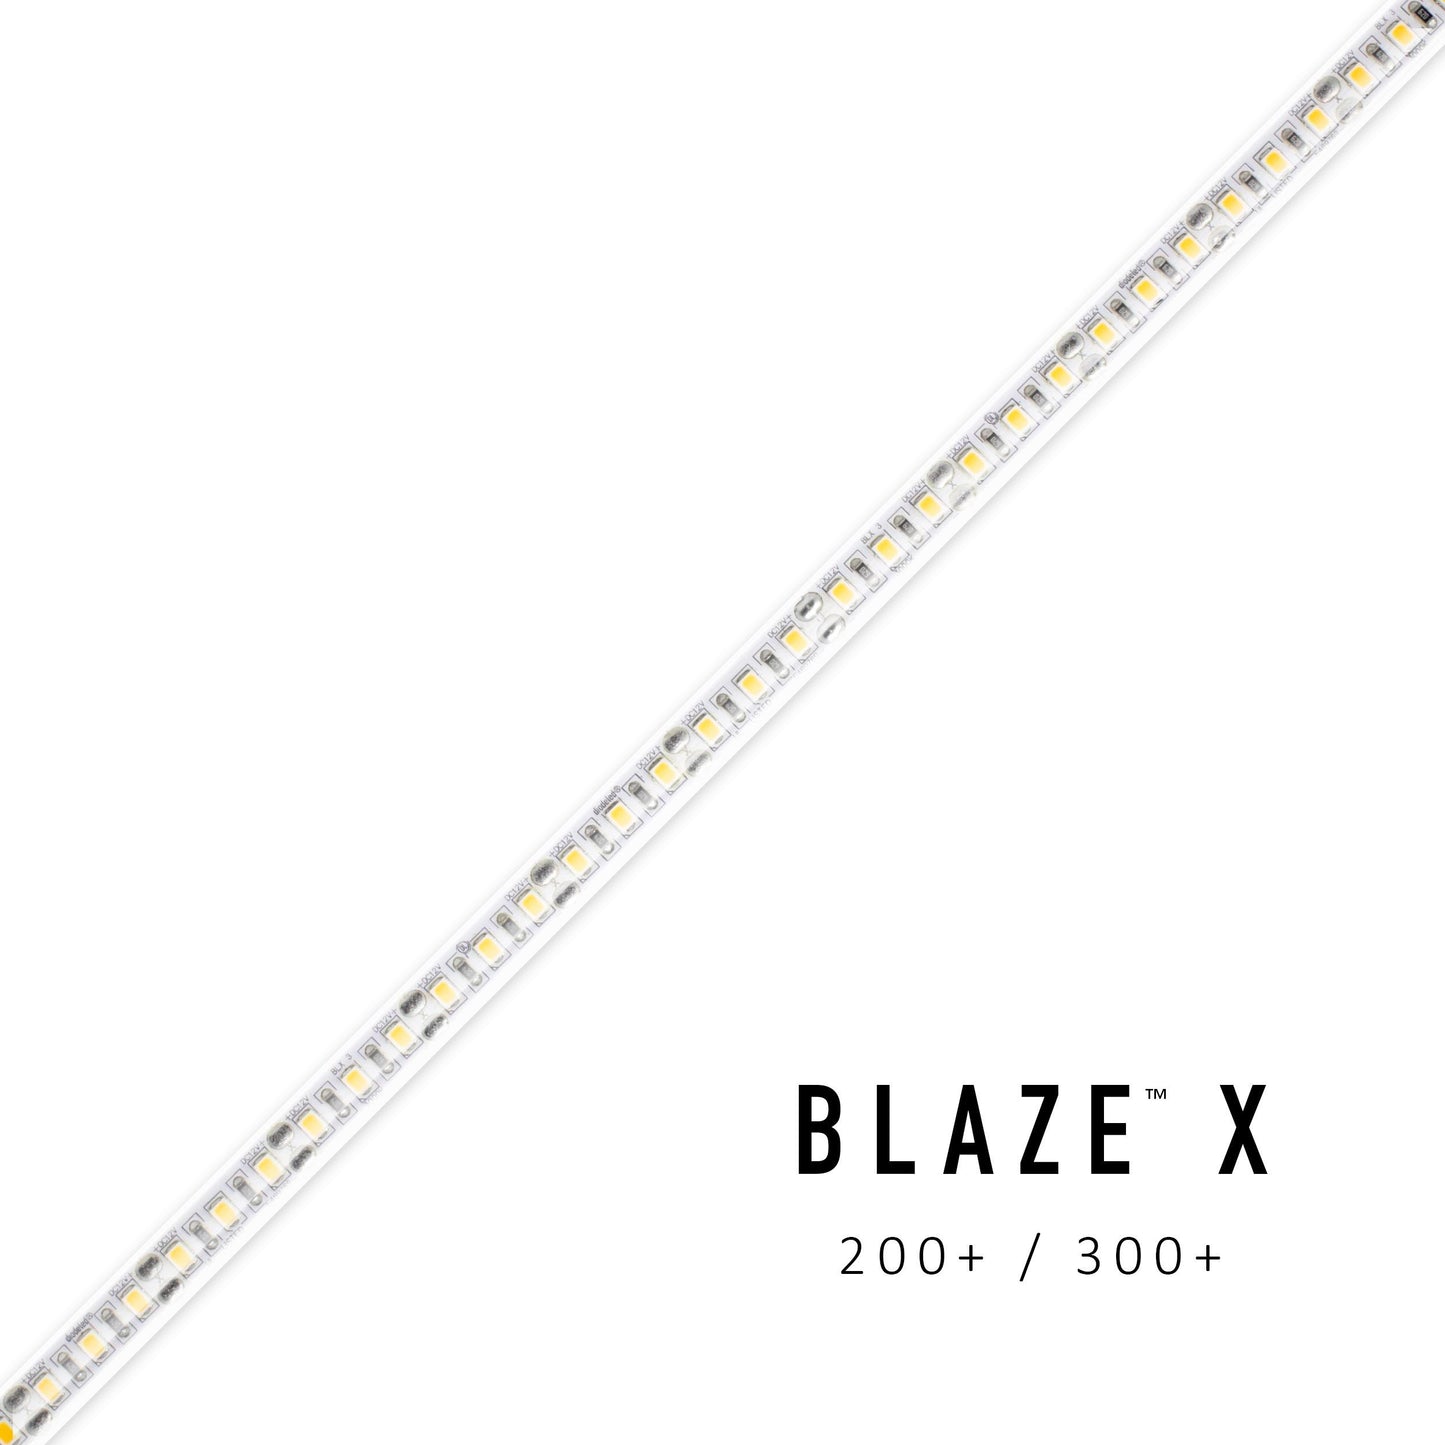 Diode LED DI-12V-BLX2-24-W100 100ft Spool Blaze X 200+ Lumen Per Foot Wet Location LED Tape Light 2400K 12V DC